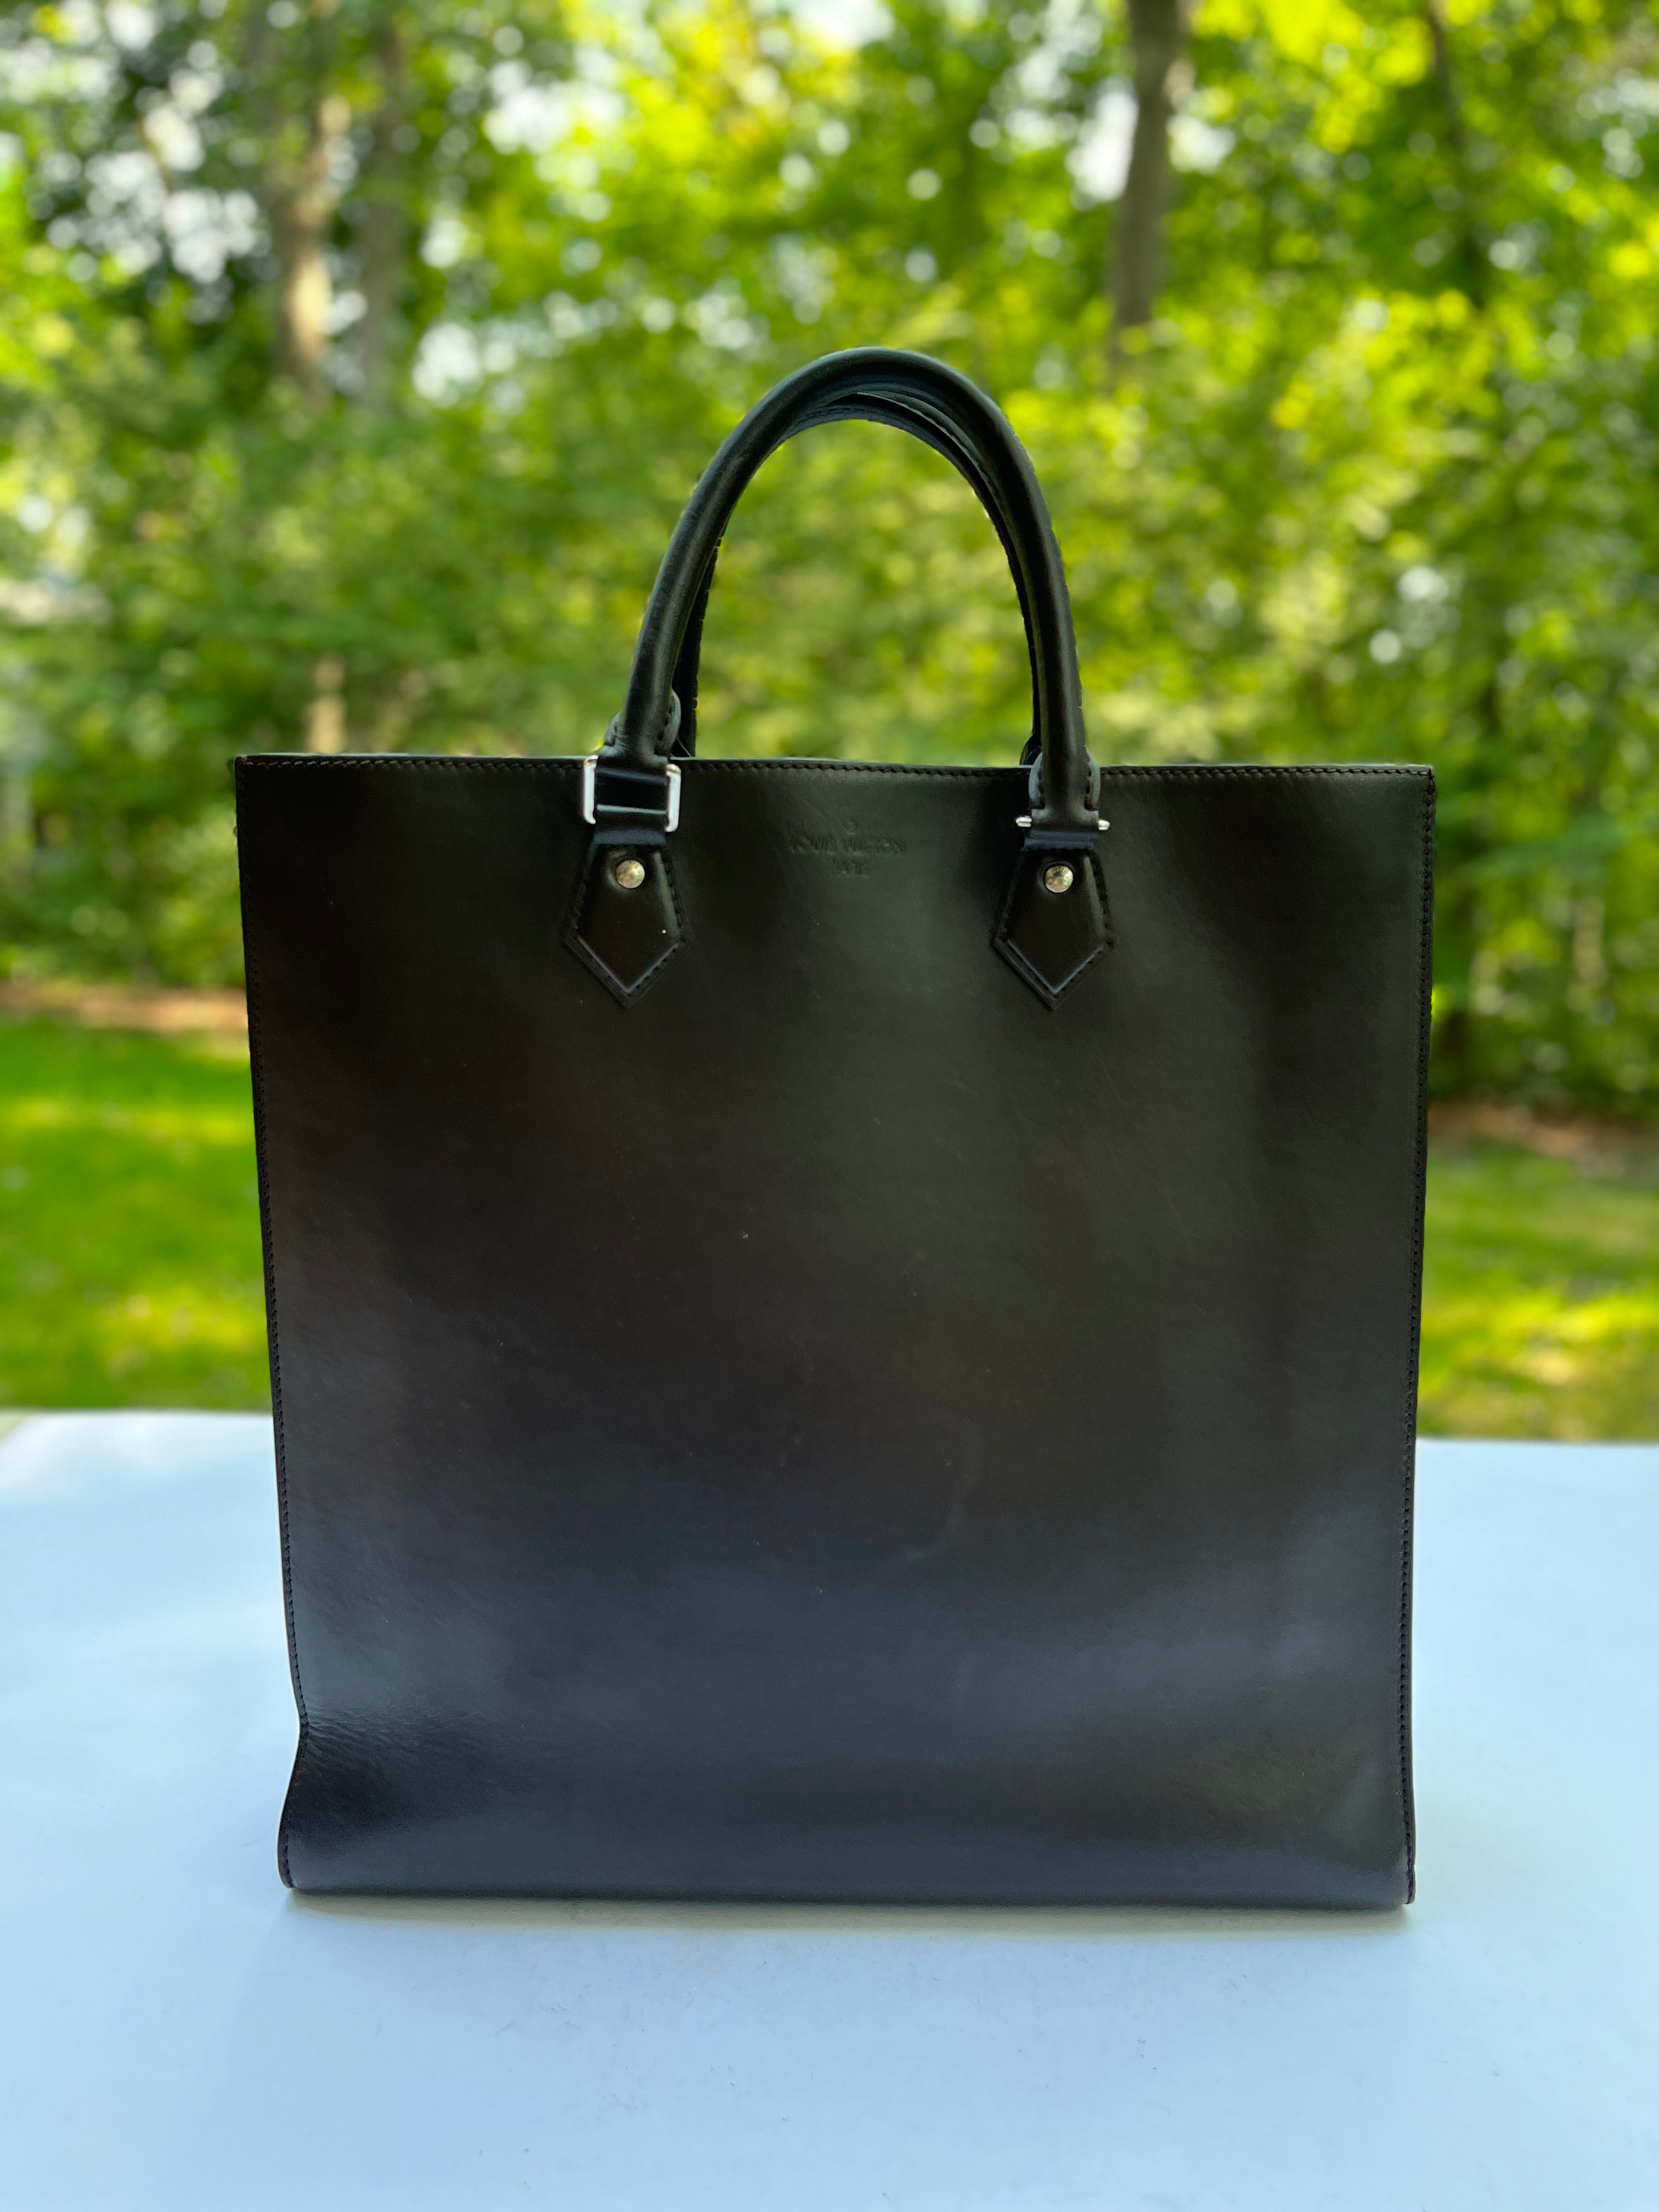 Louis Vuitton Nomade Leather Sac Plat in Dark Brown – Chicago